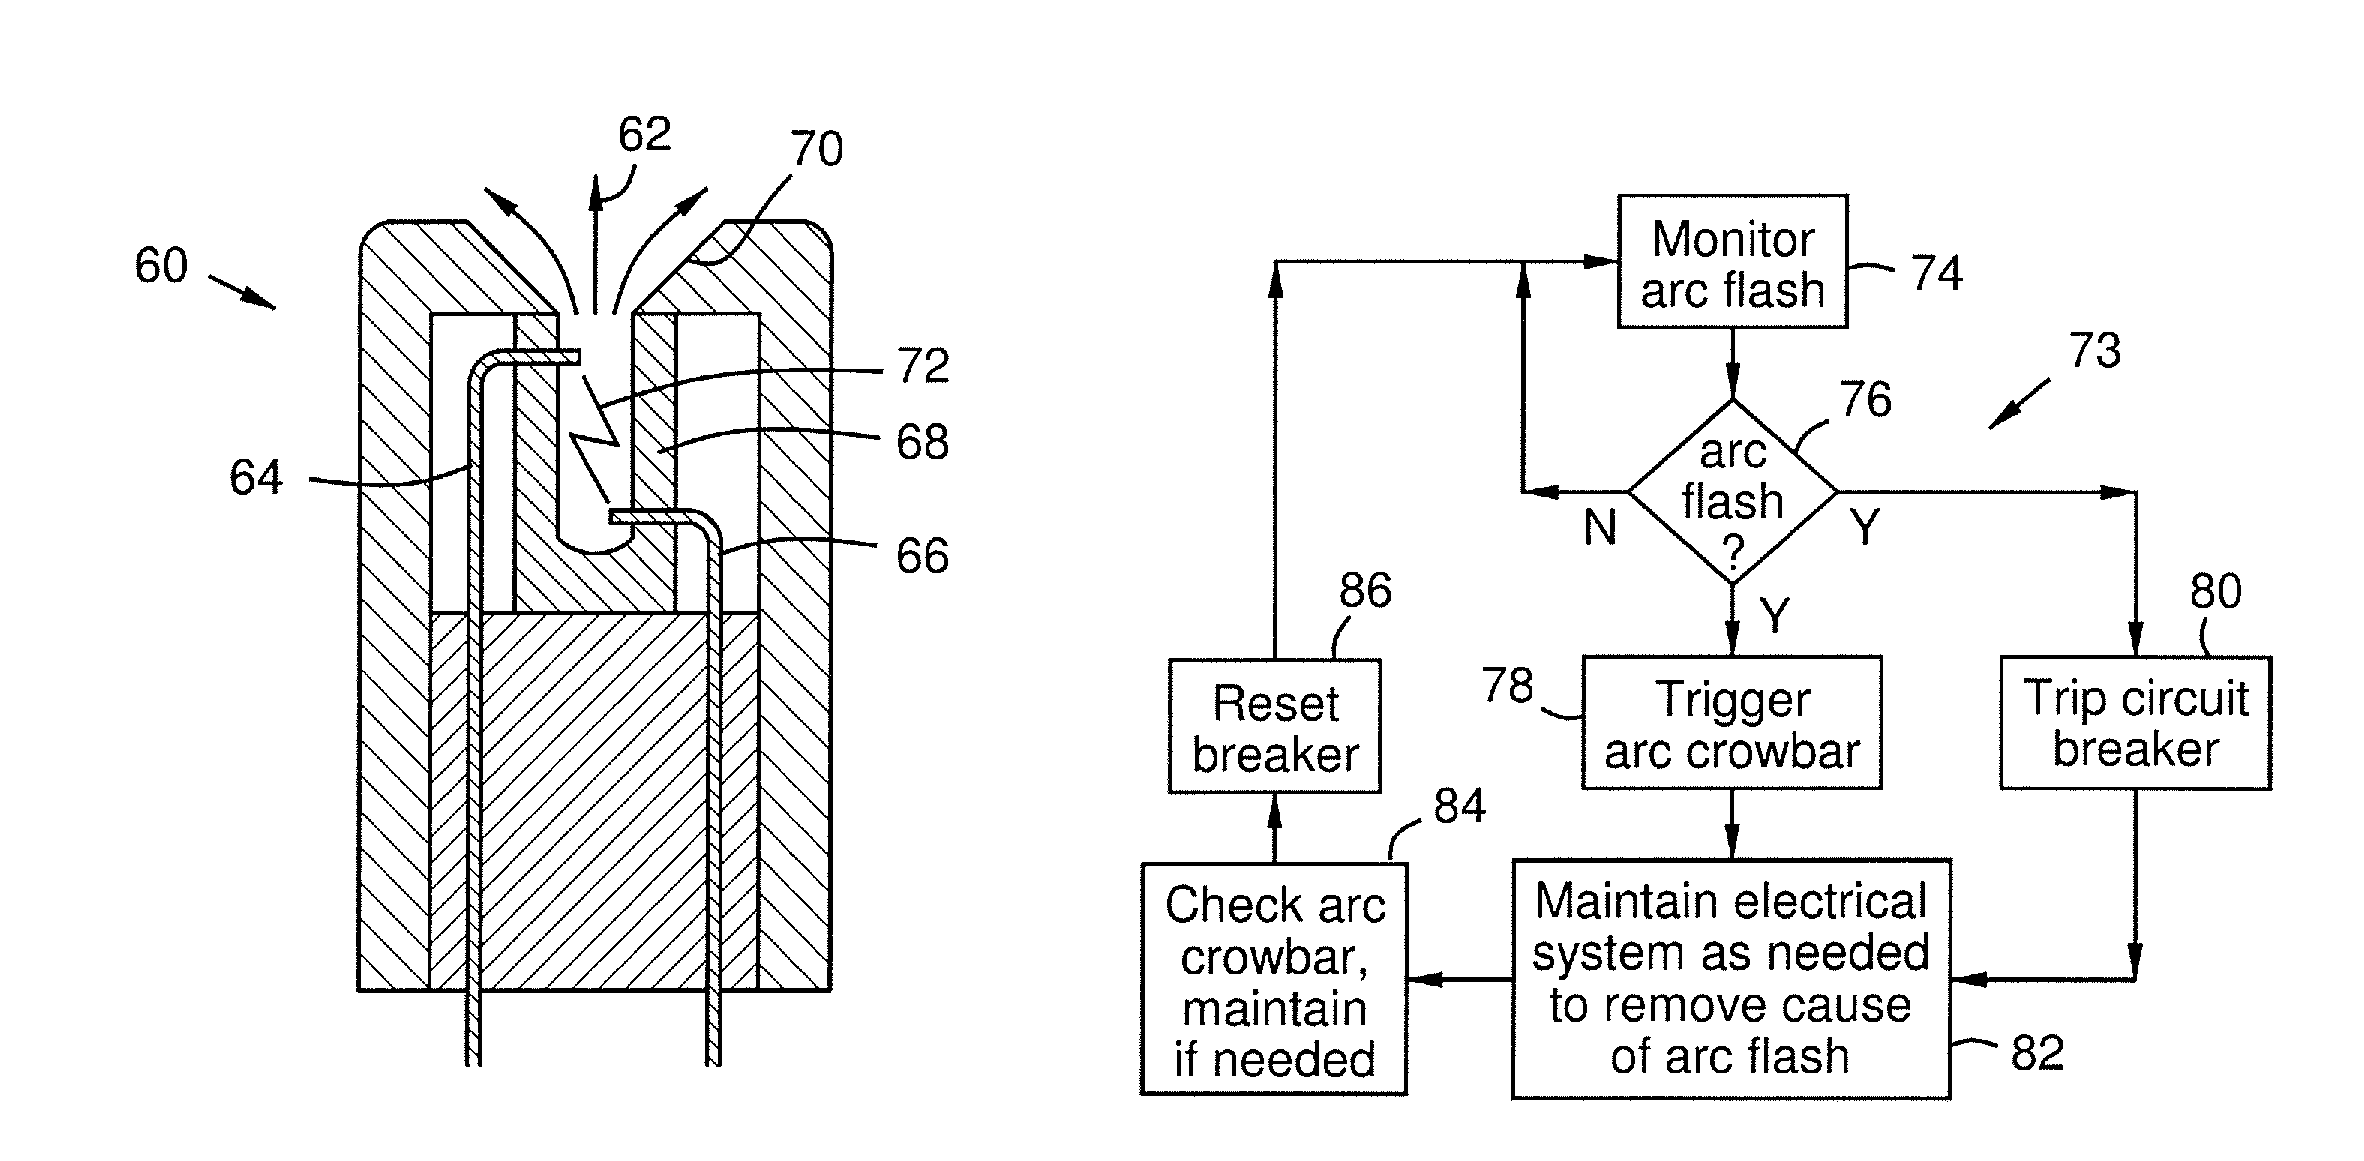 Arc flash elimination apparatus and method